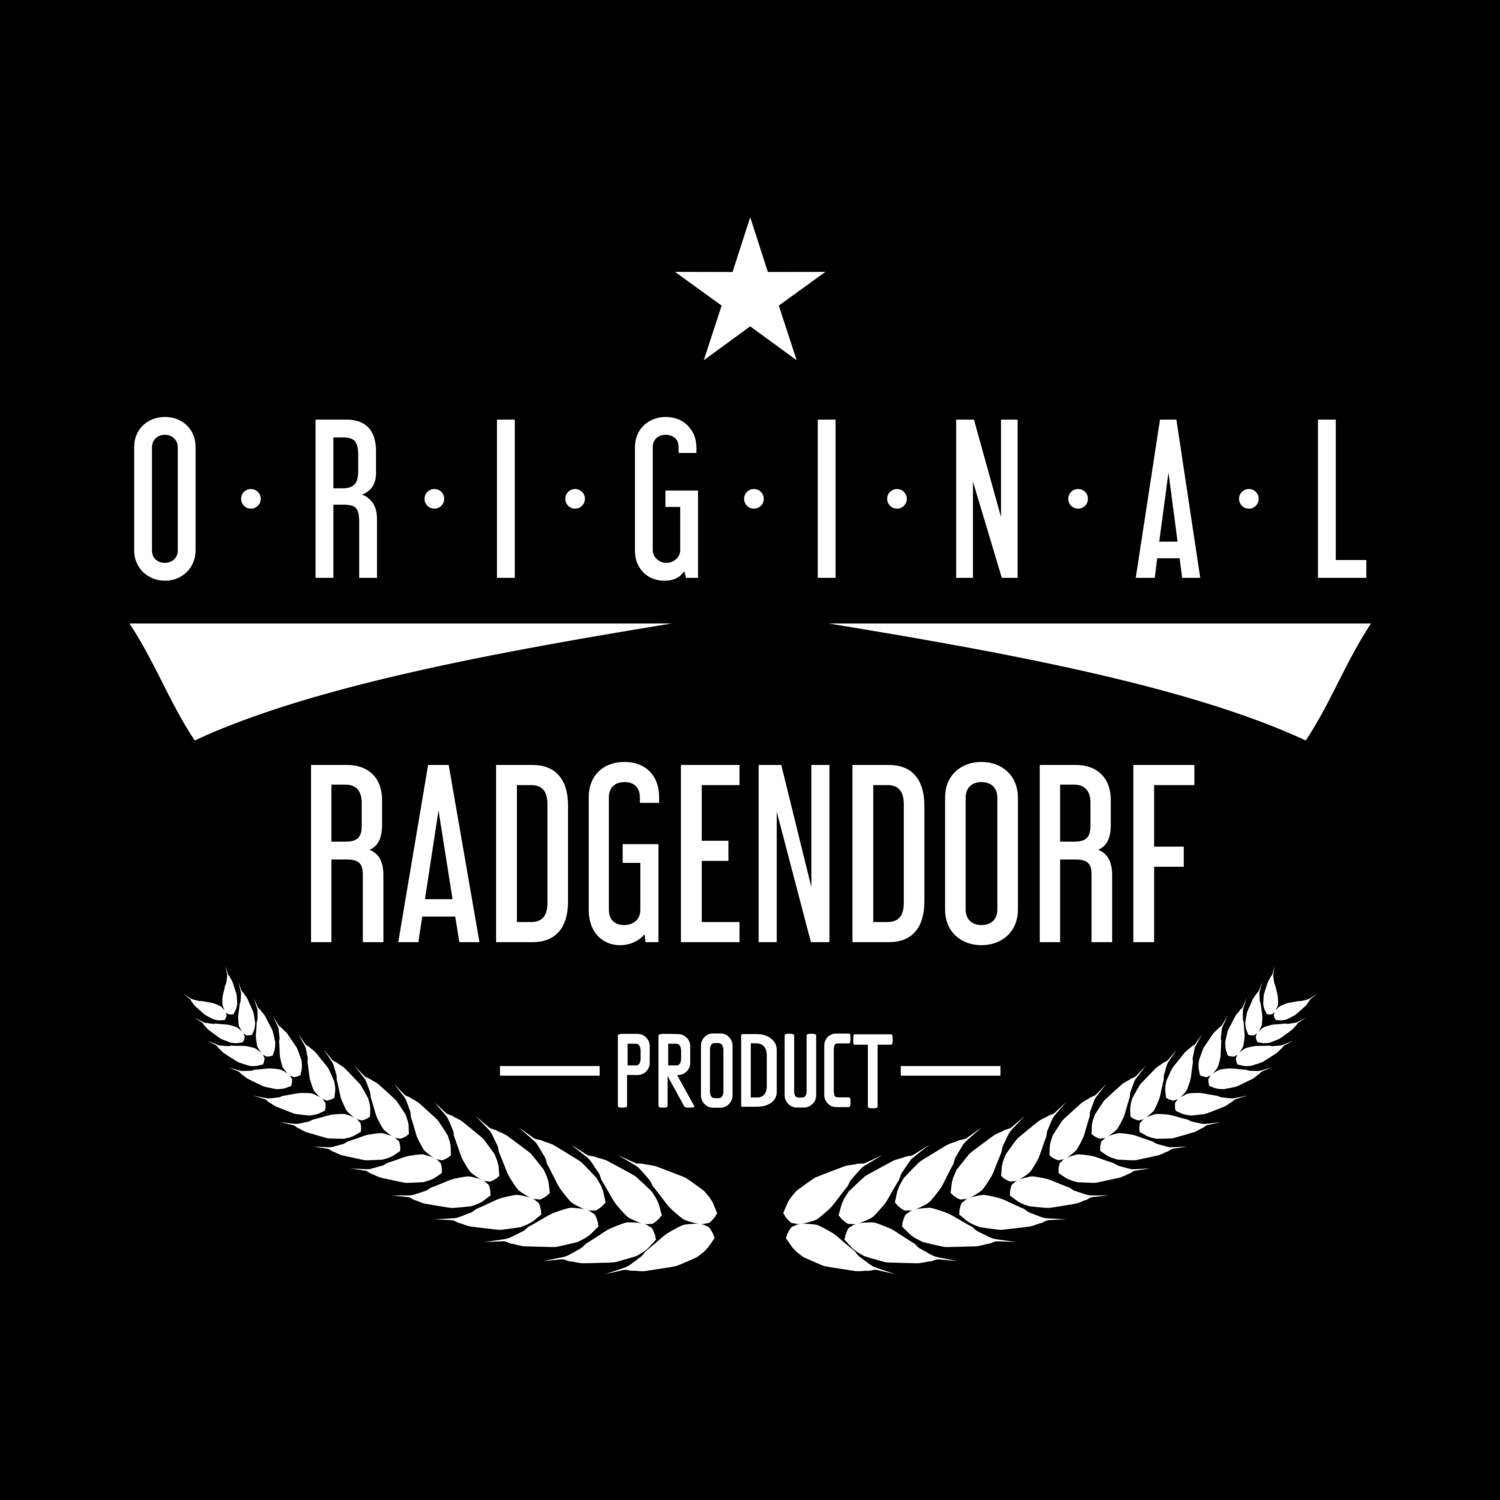 Radgendorf T-Shirt »Original Product«